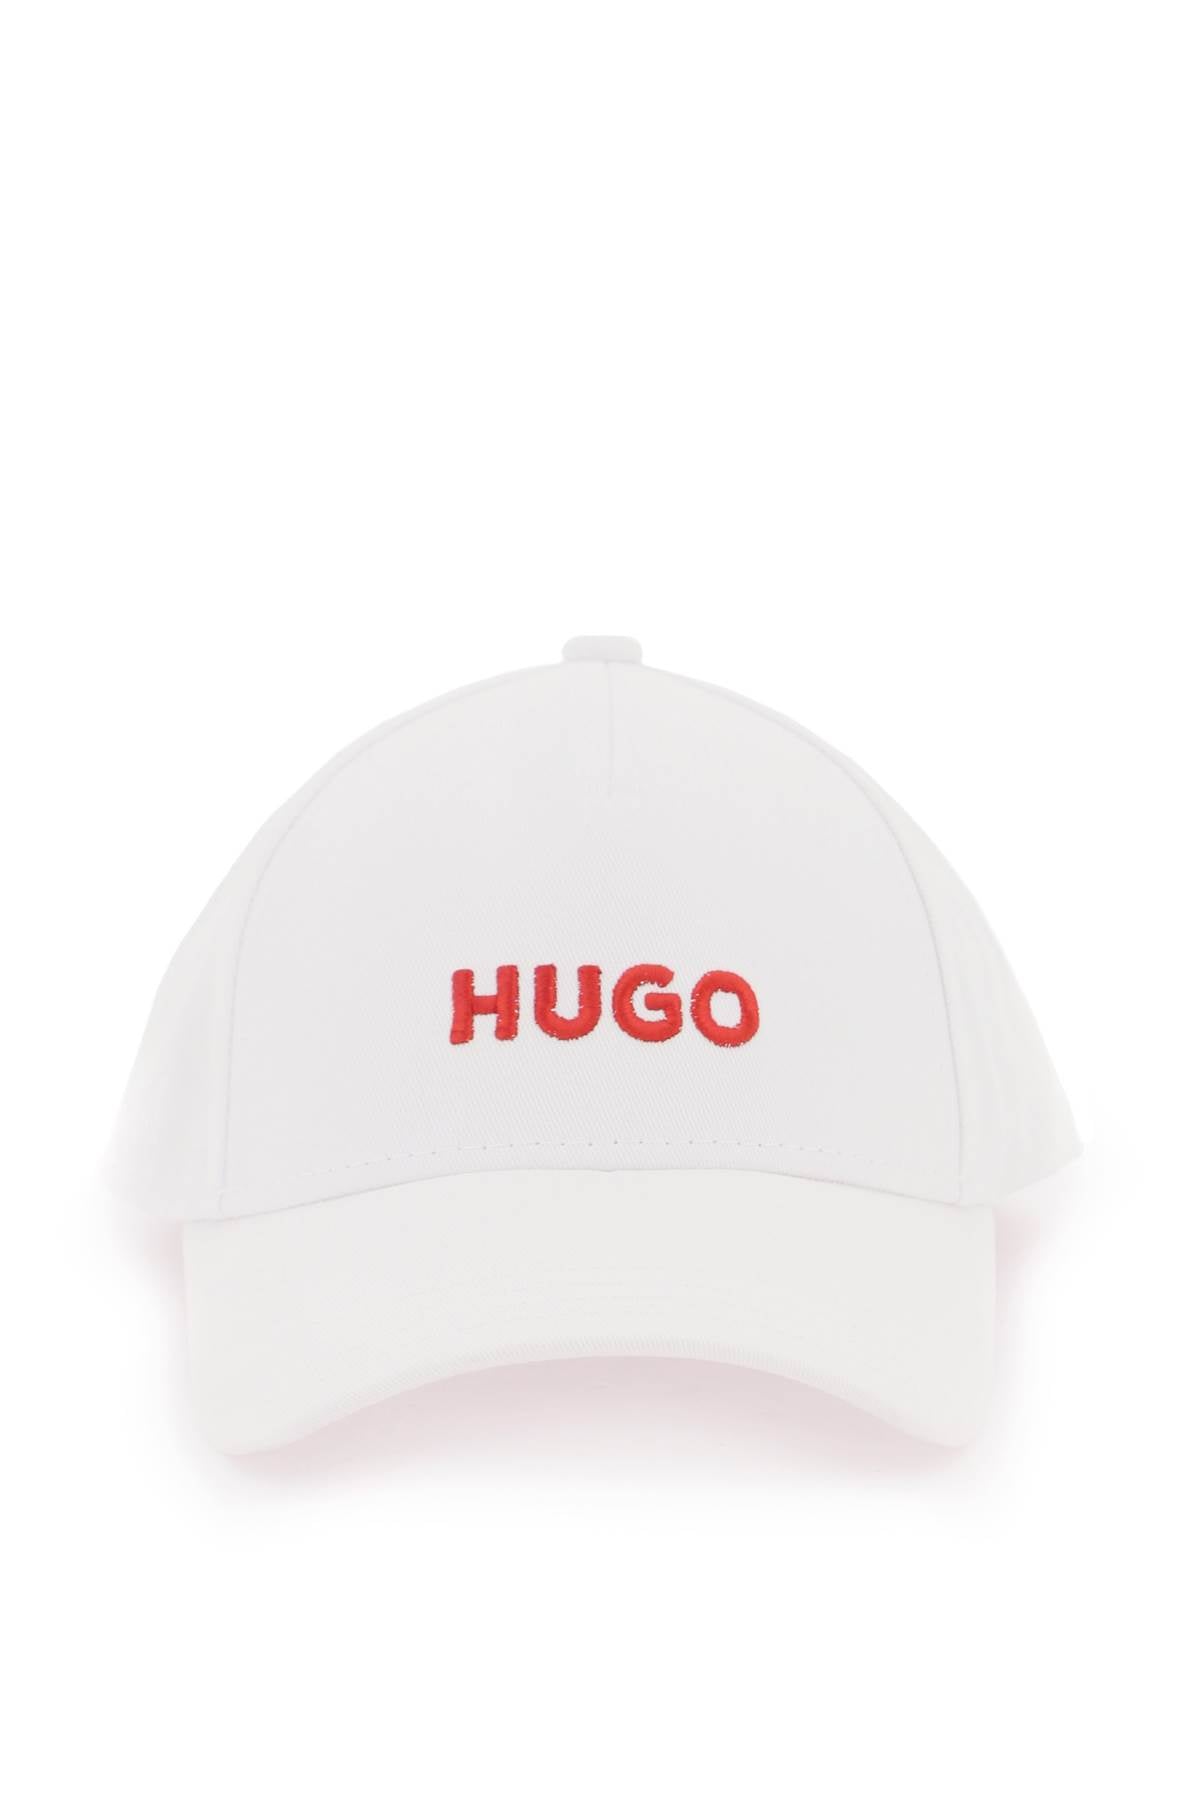 embroidered baseball – logo Italy Station with Hugo cap